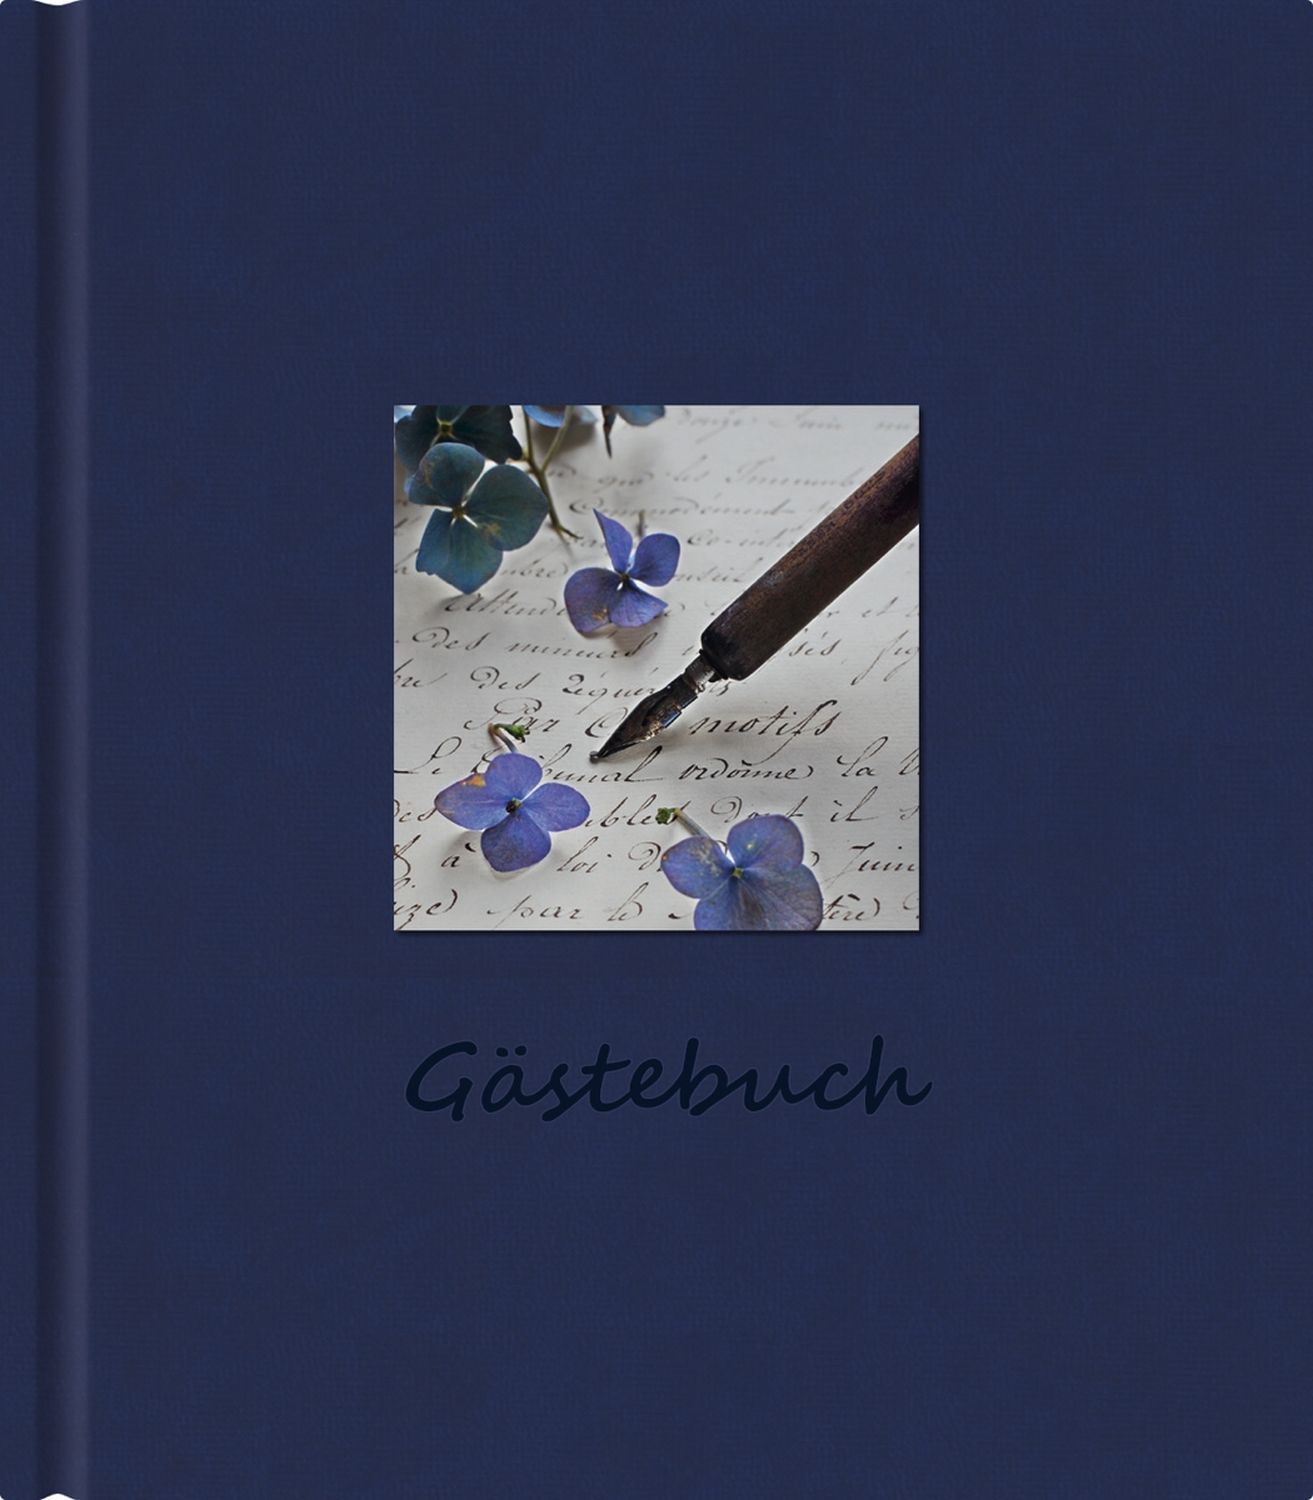 Gästebuch "Scriptura" - 21 x 24 cm